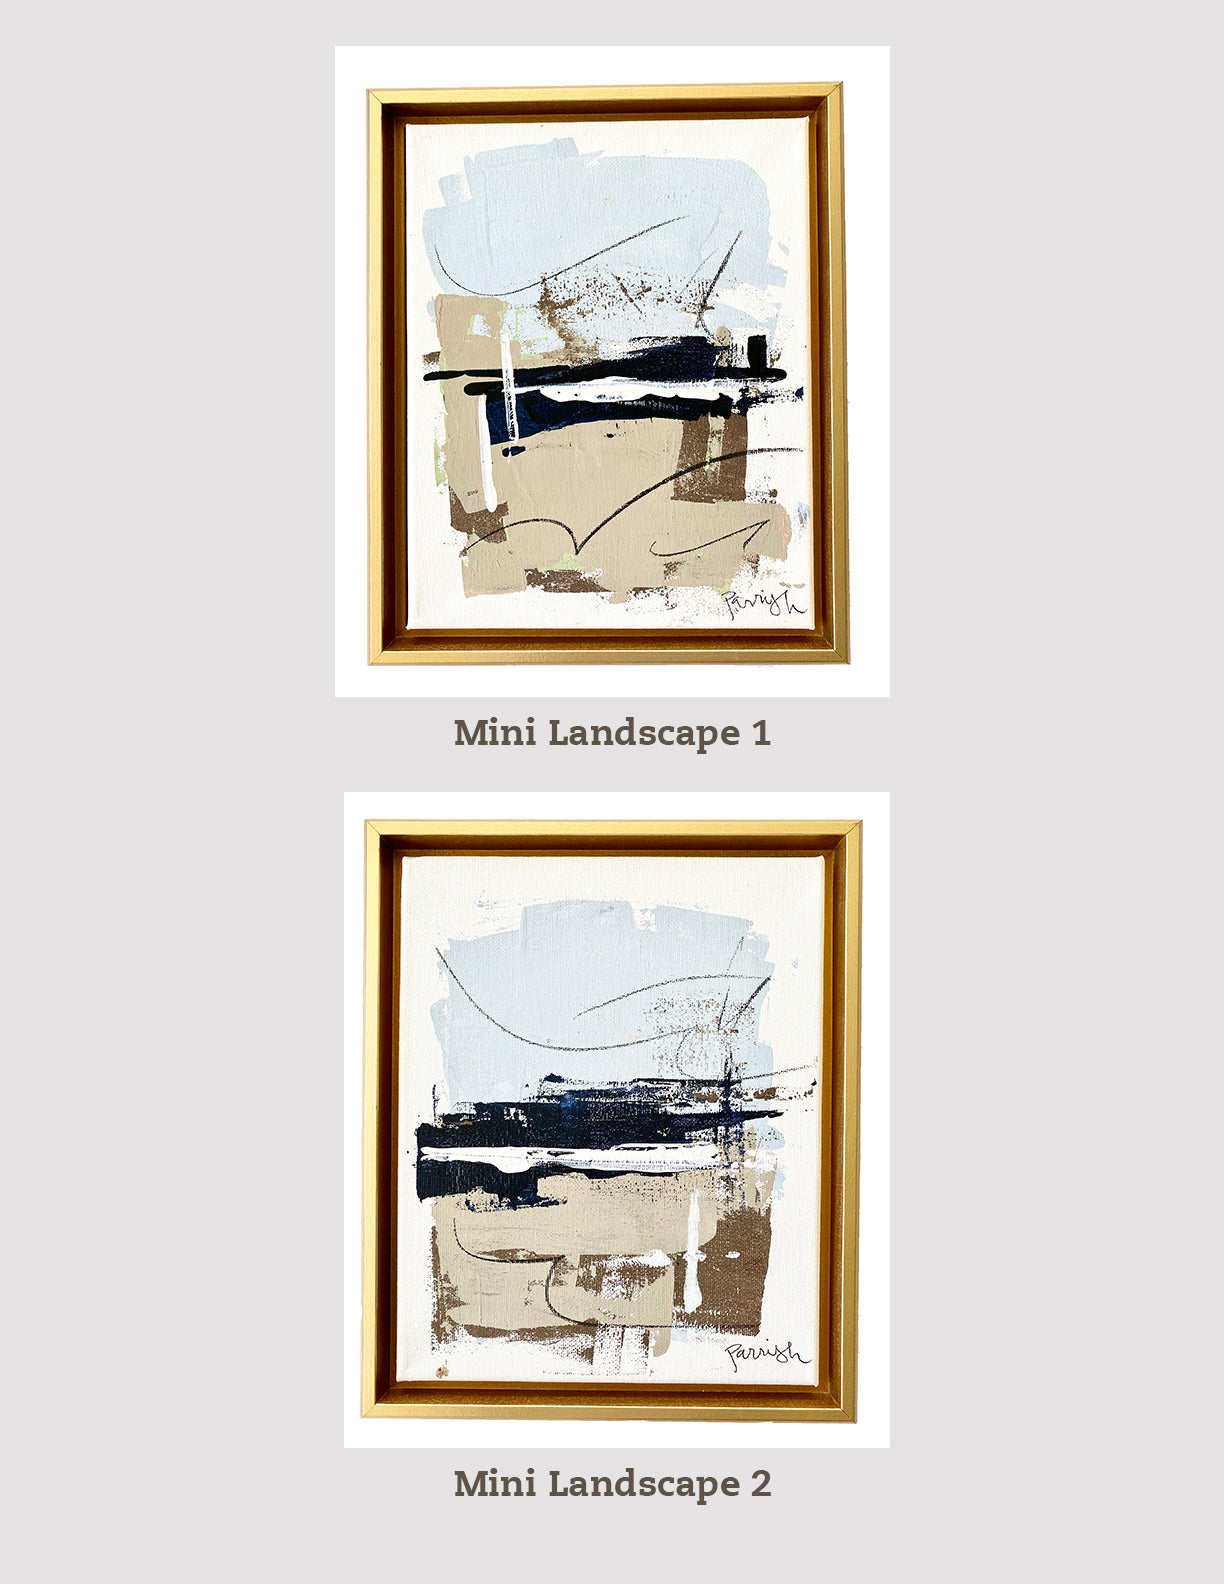 Mini Landscape 2 - 8x10"